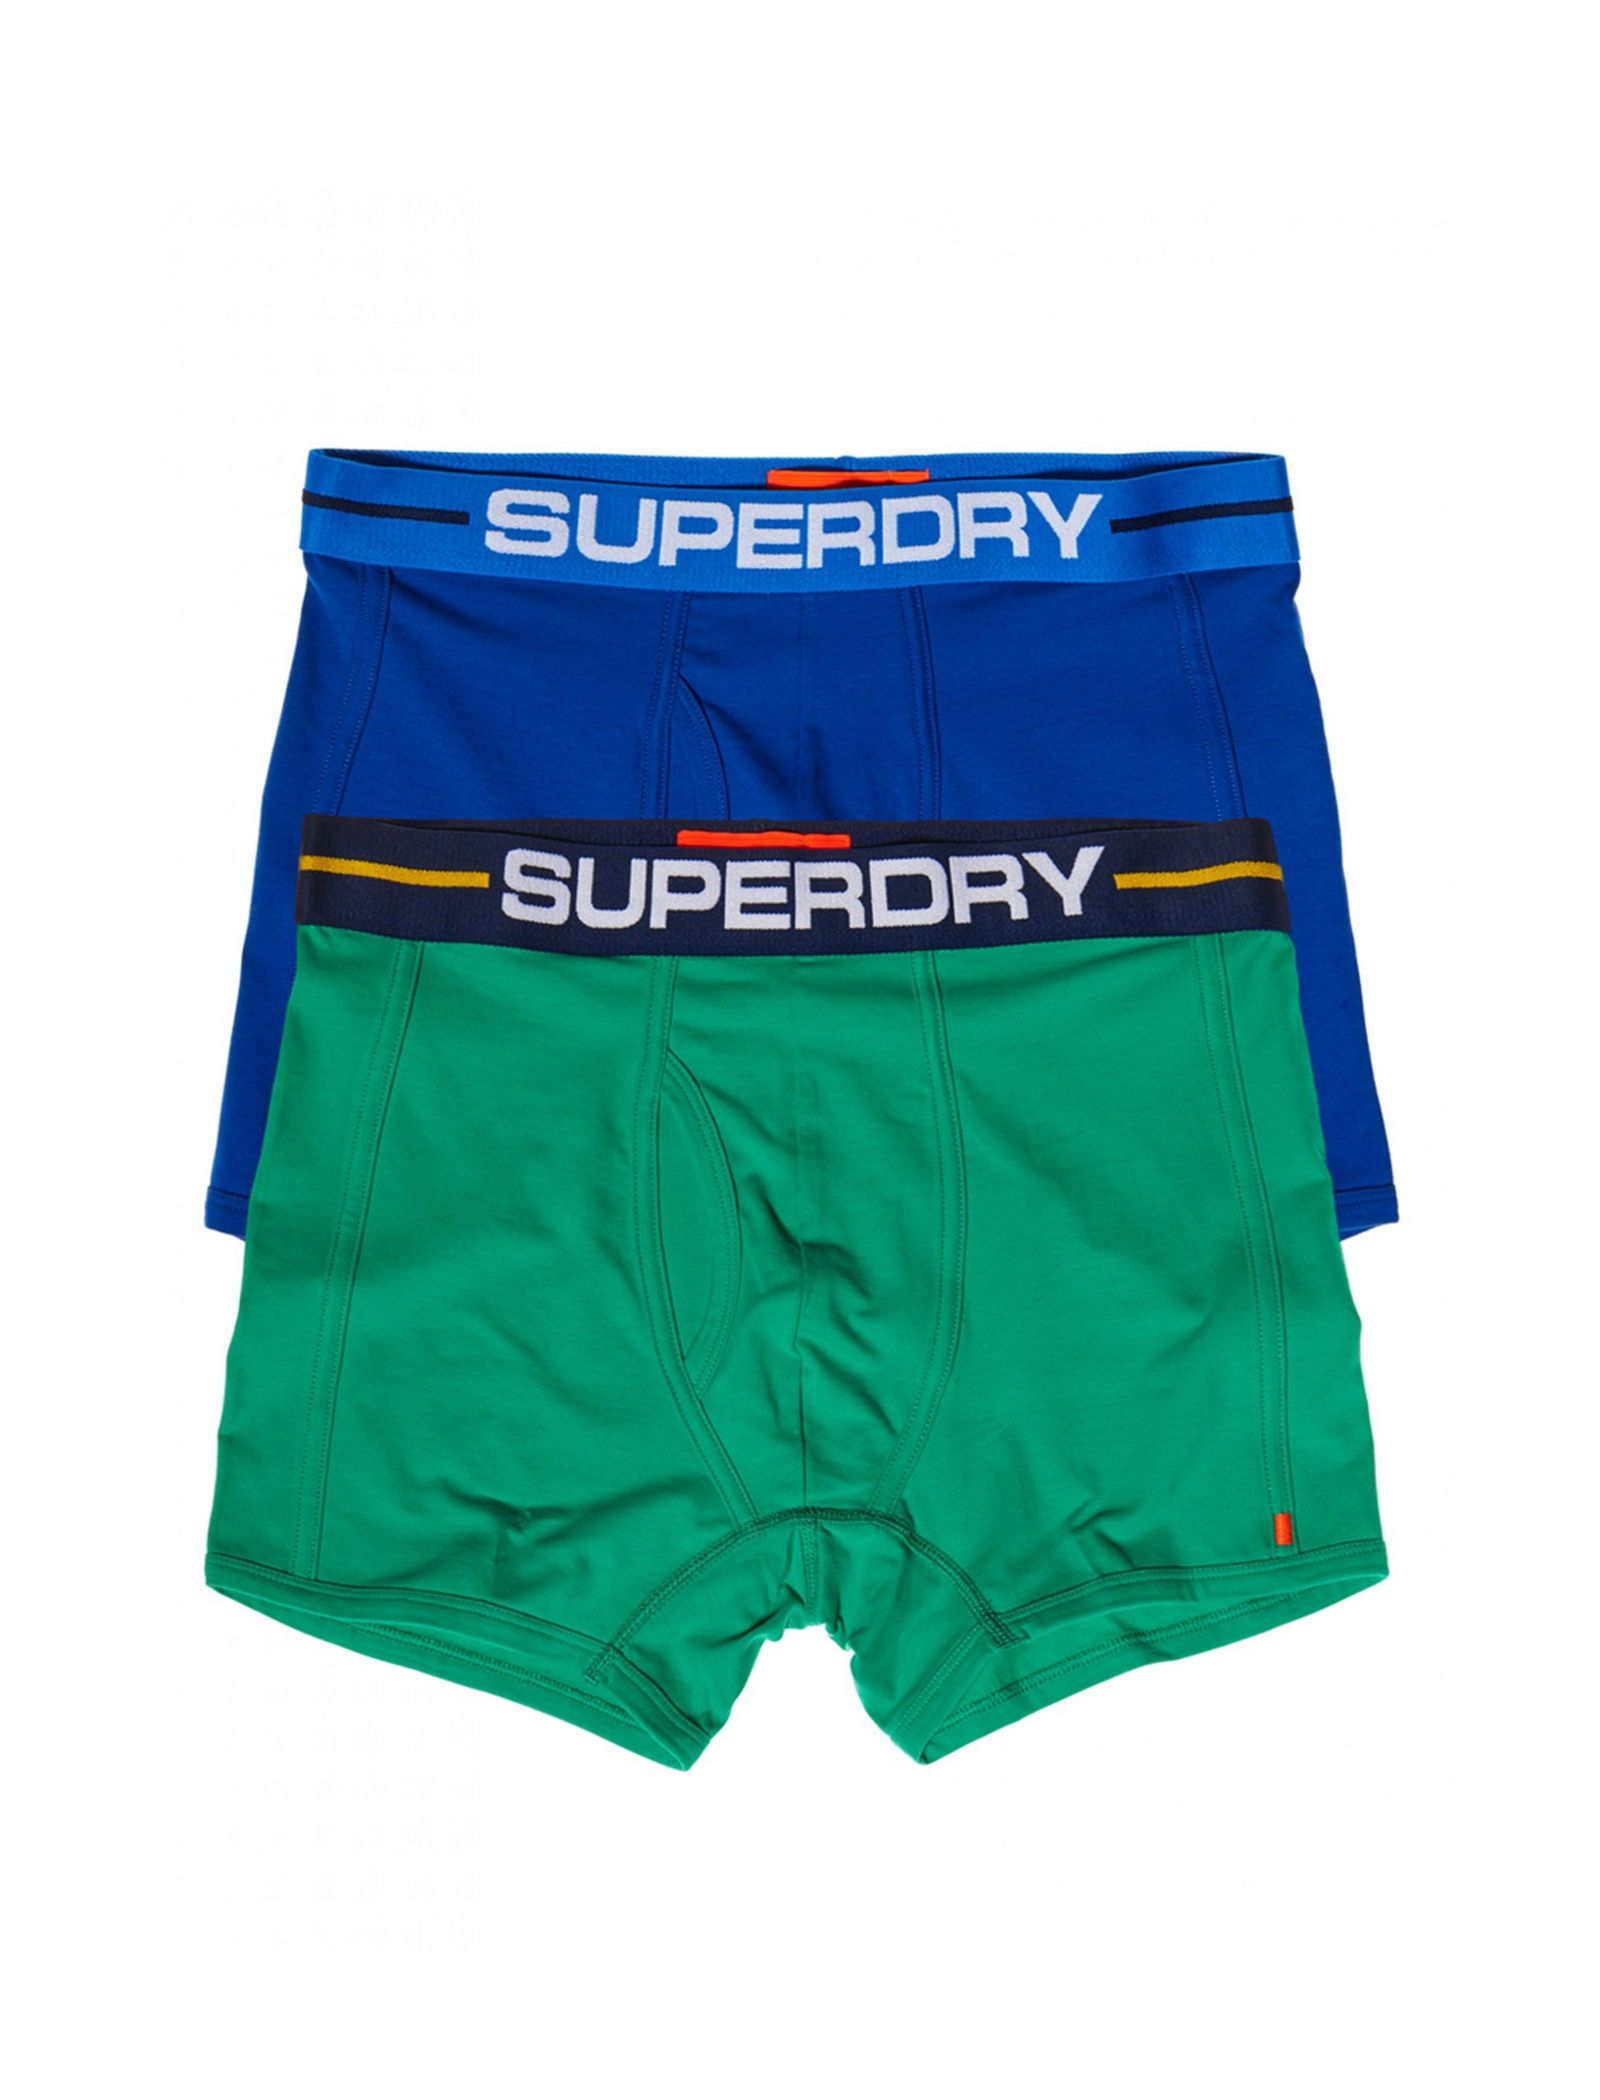 Men Cotton Boxer Underwear Pack Of 2 - سوپردرای - آبي/سبز - 3